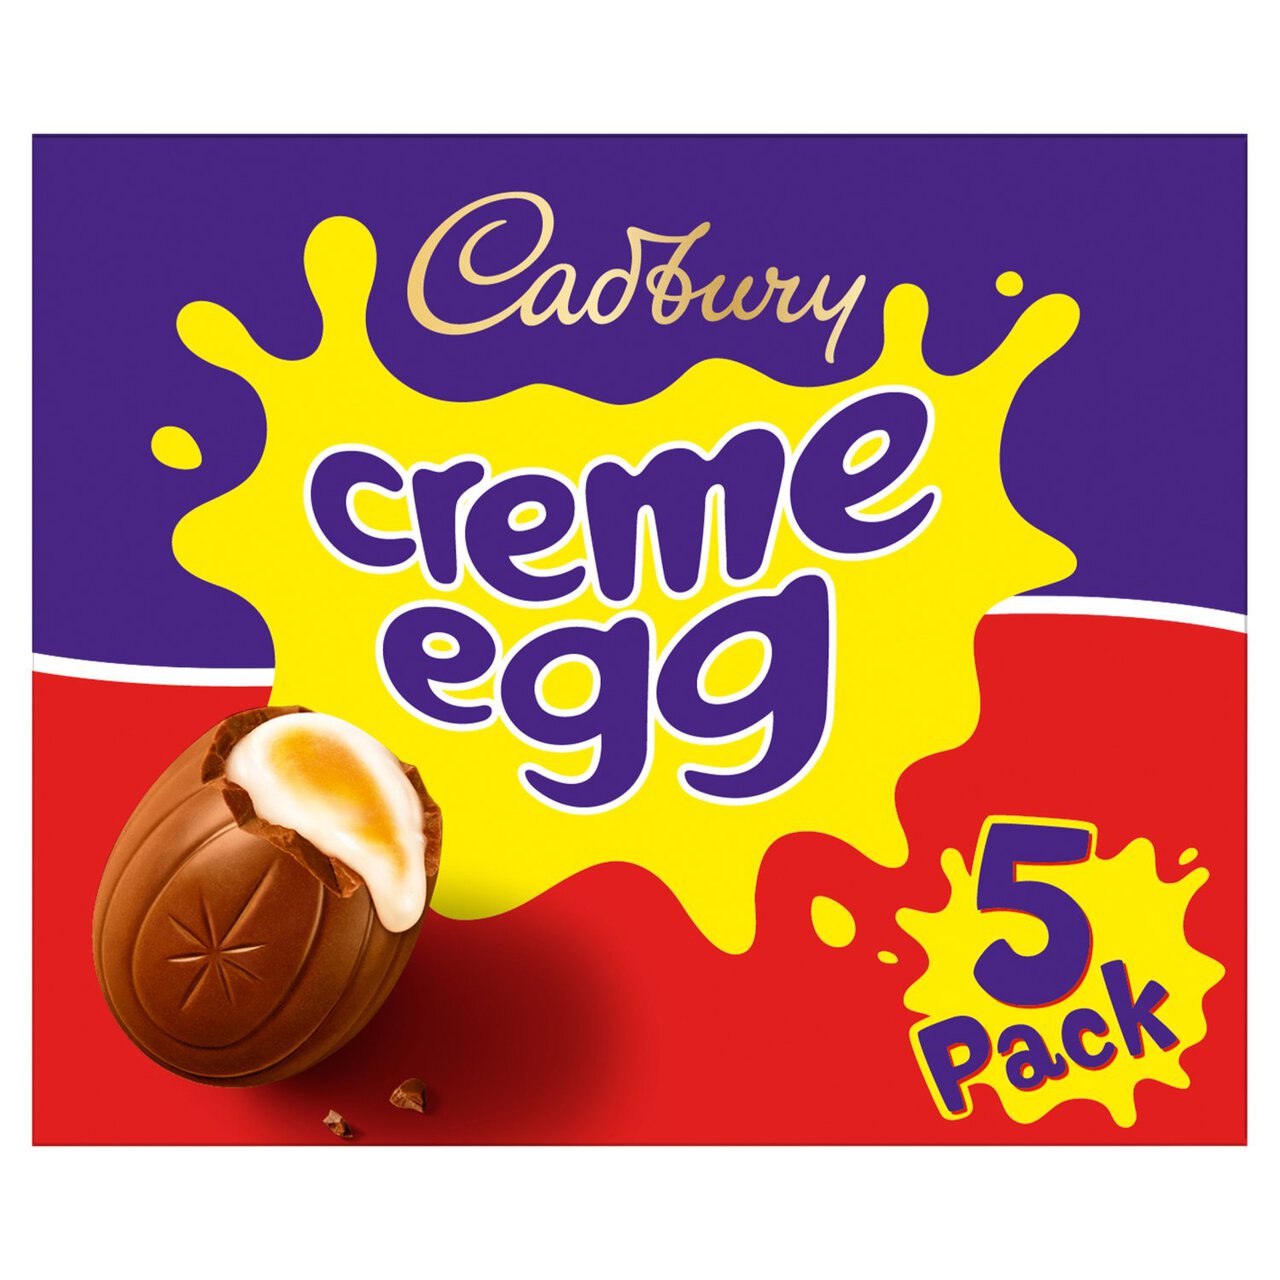 Cadbury Chocolate 5 Creme Eggs 197g